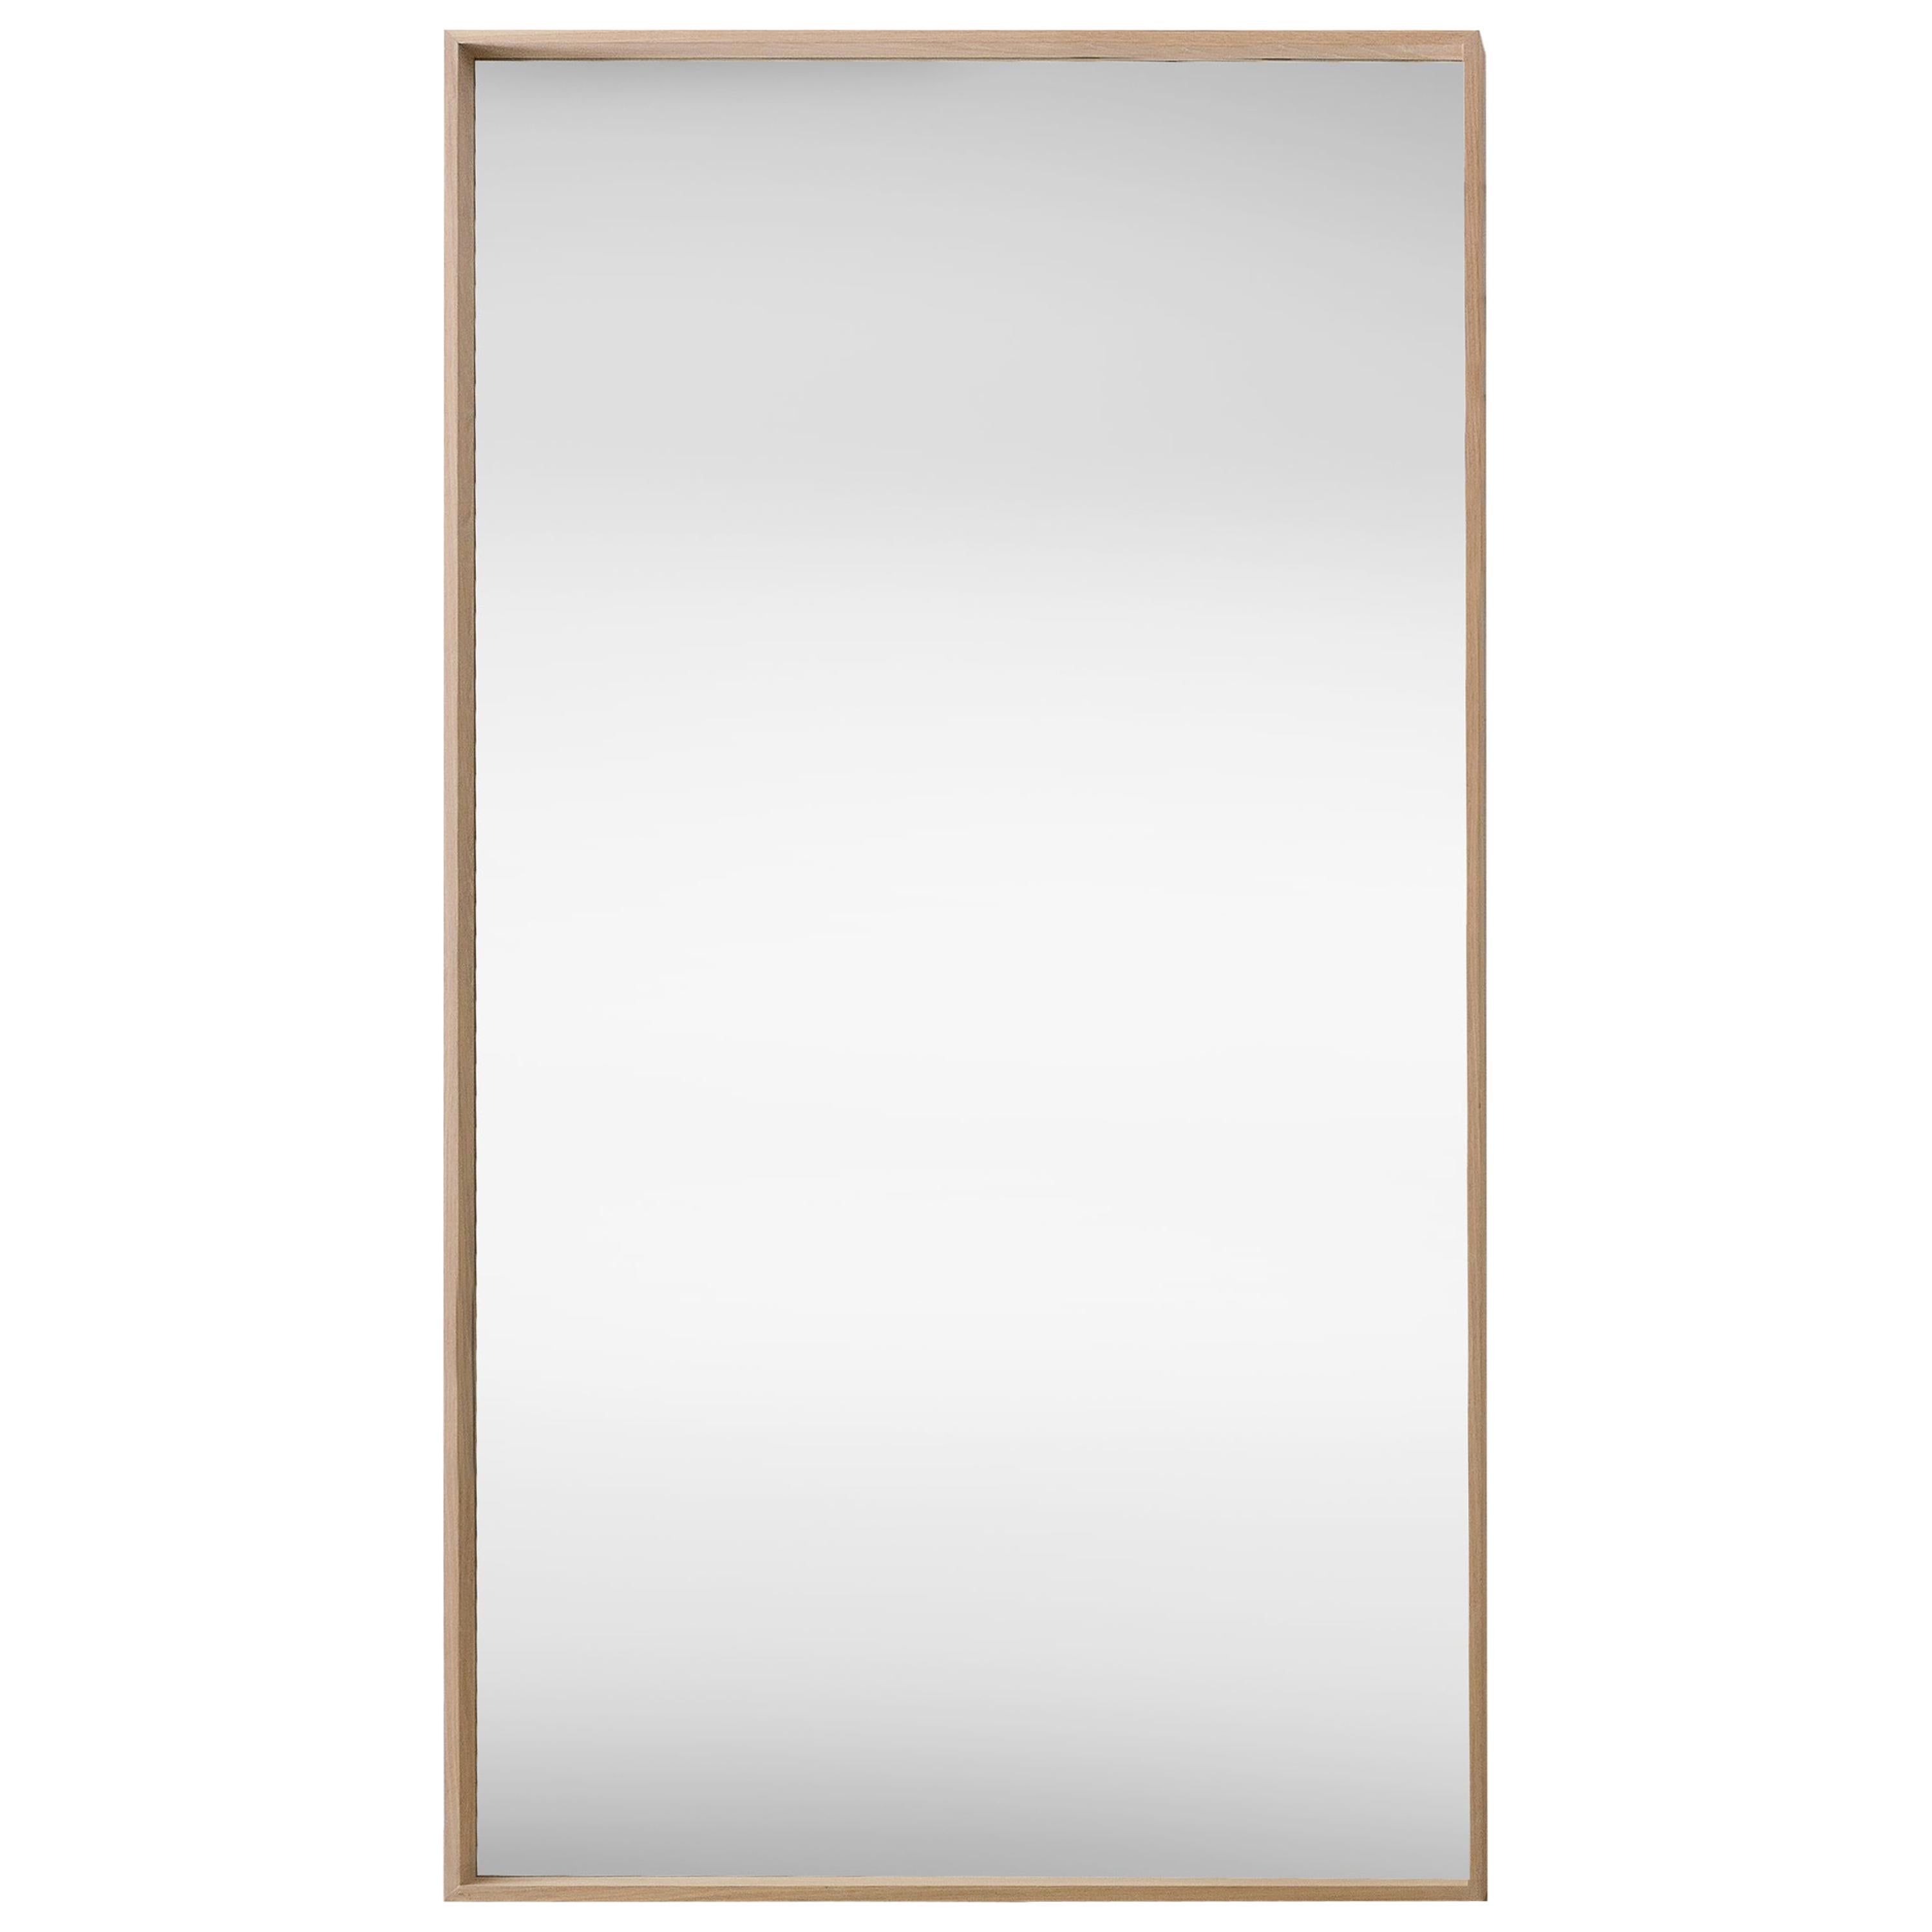 Marco Large Mirror with White Oak Veneer Frame